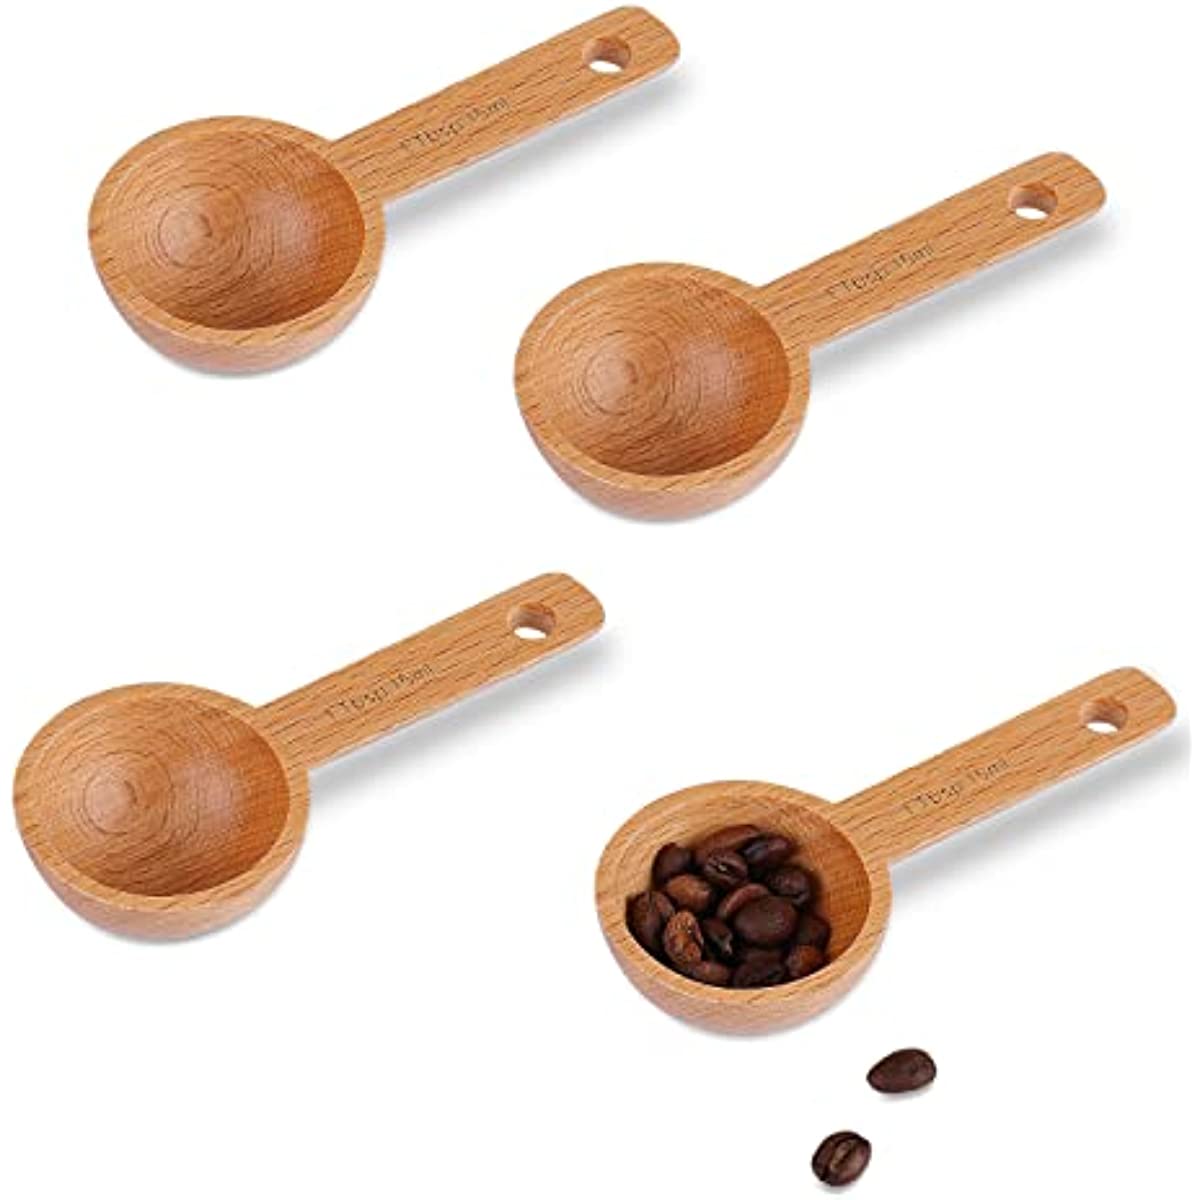 Walnut Coffee Scoop small One Teaspoon Size 